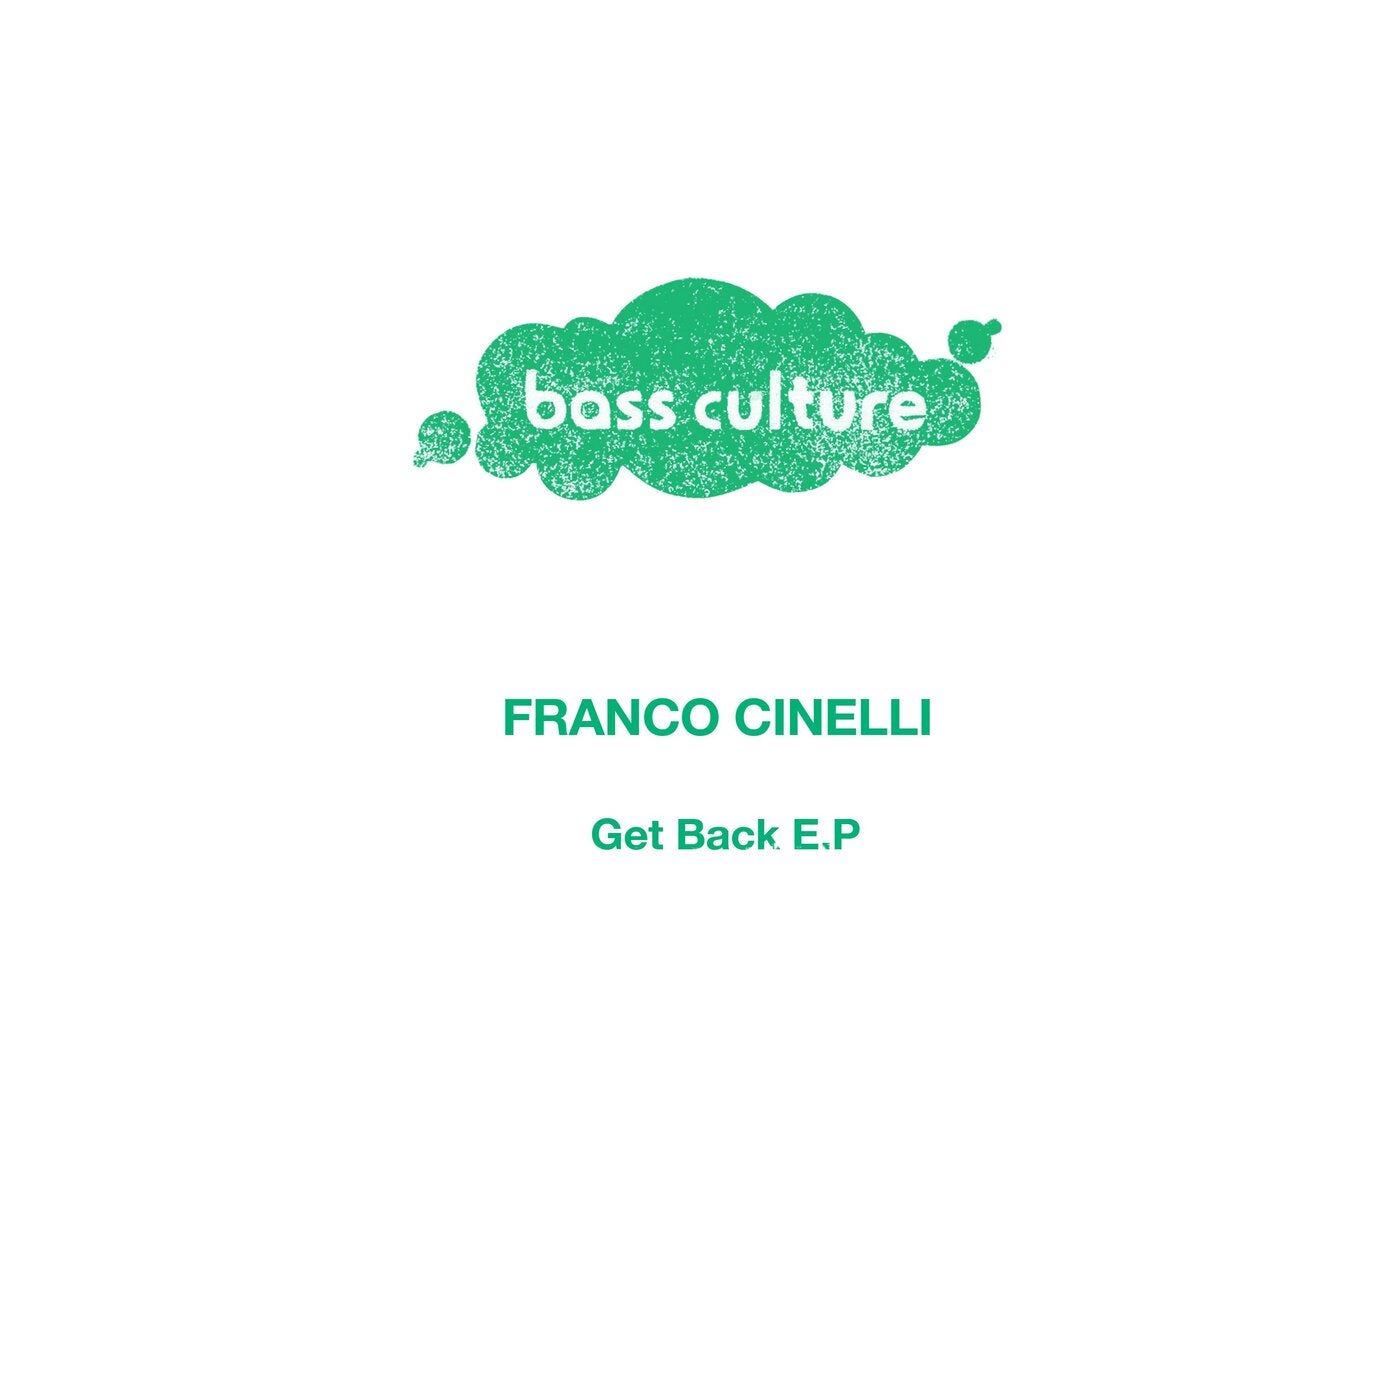 Franco Cinelli – Get Back E.P [BCR064]